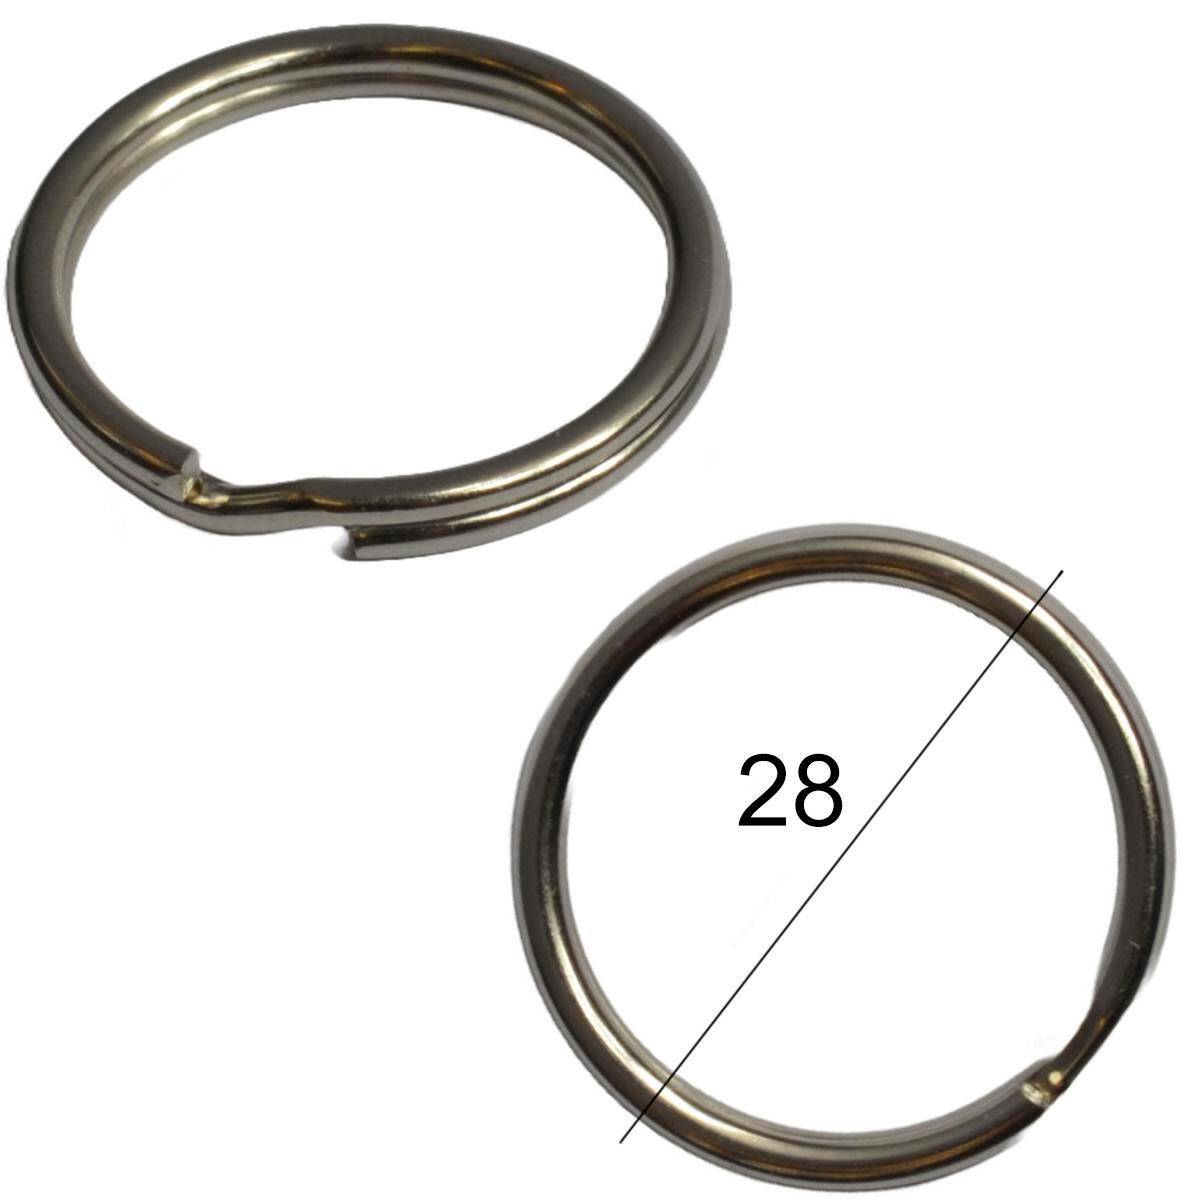 Key rings - 28 mm